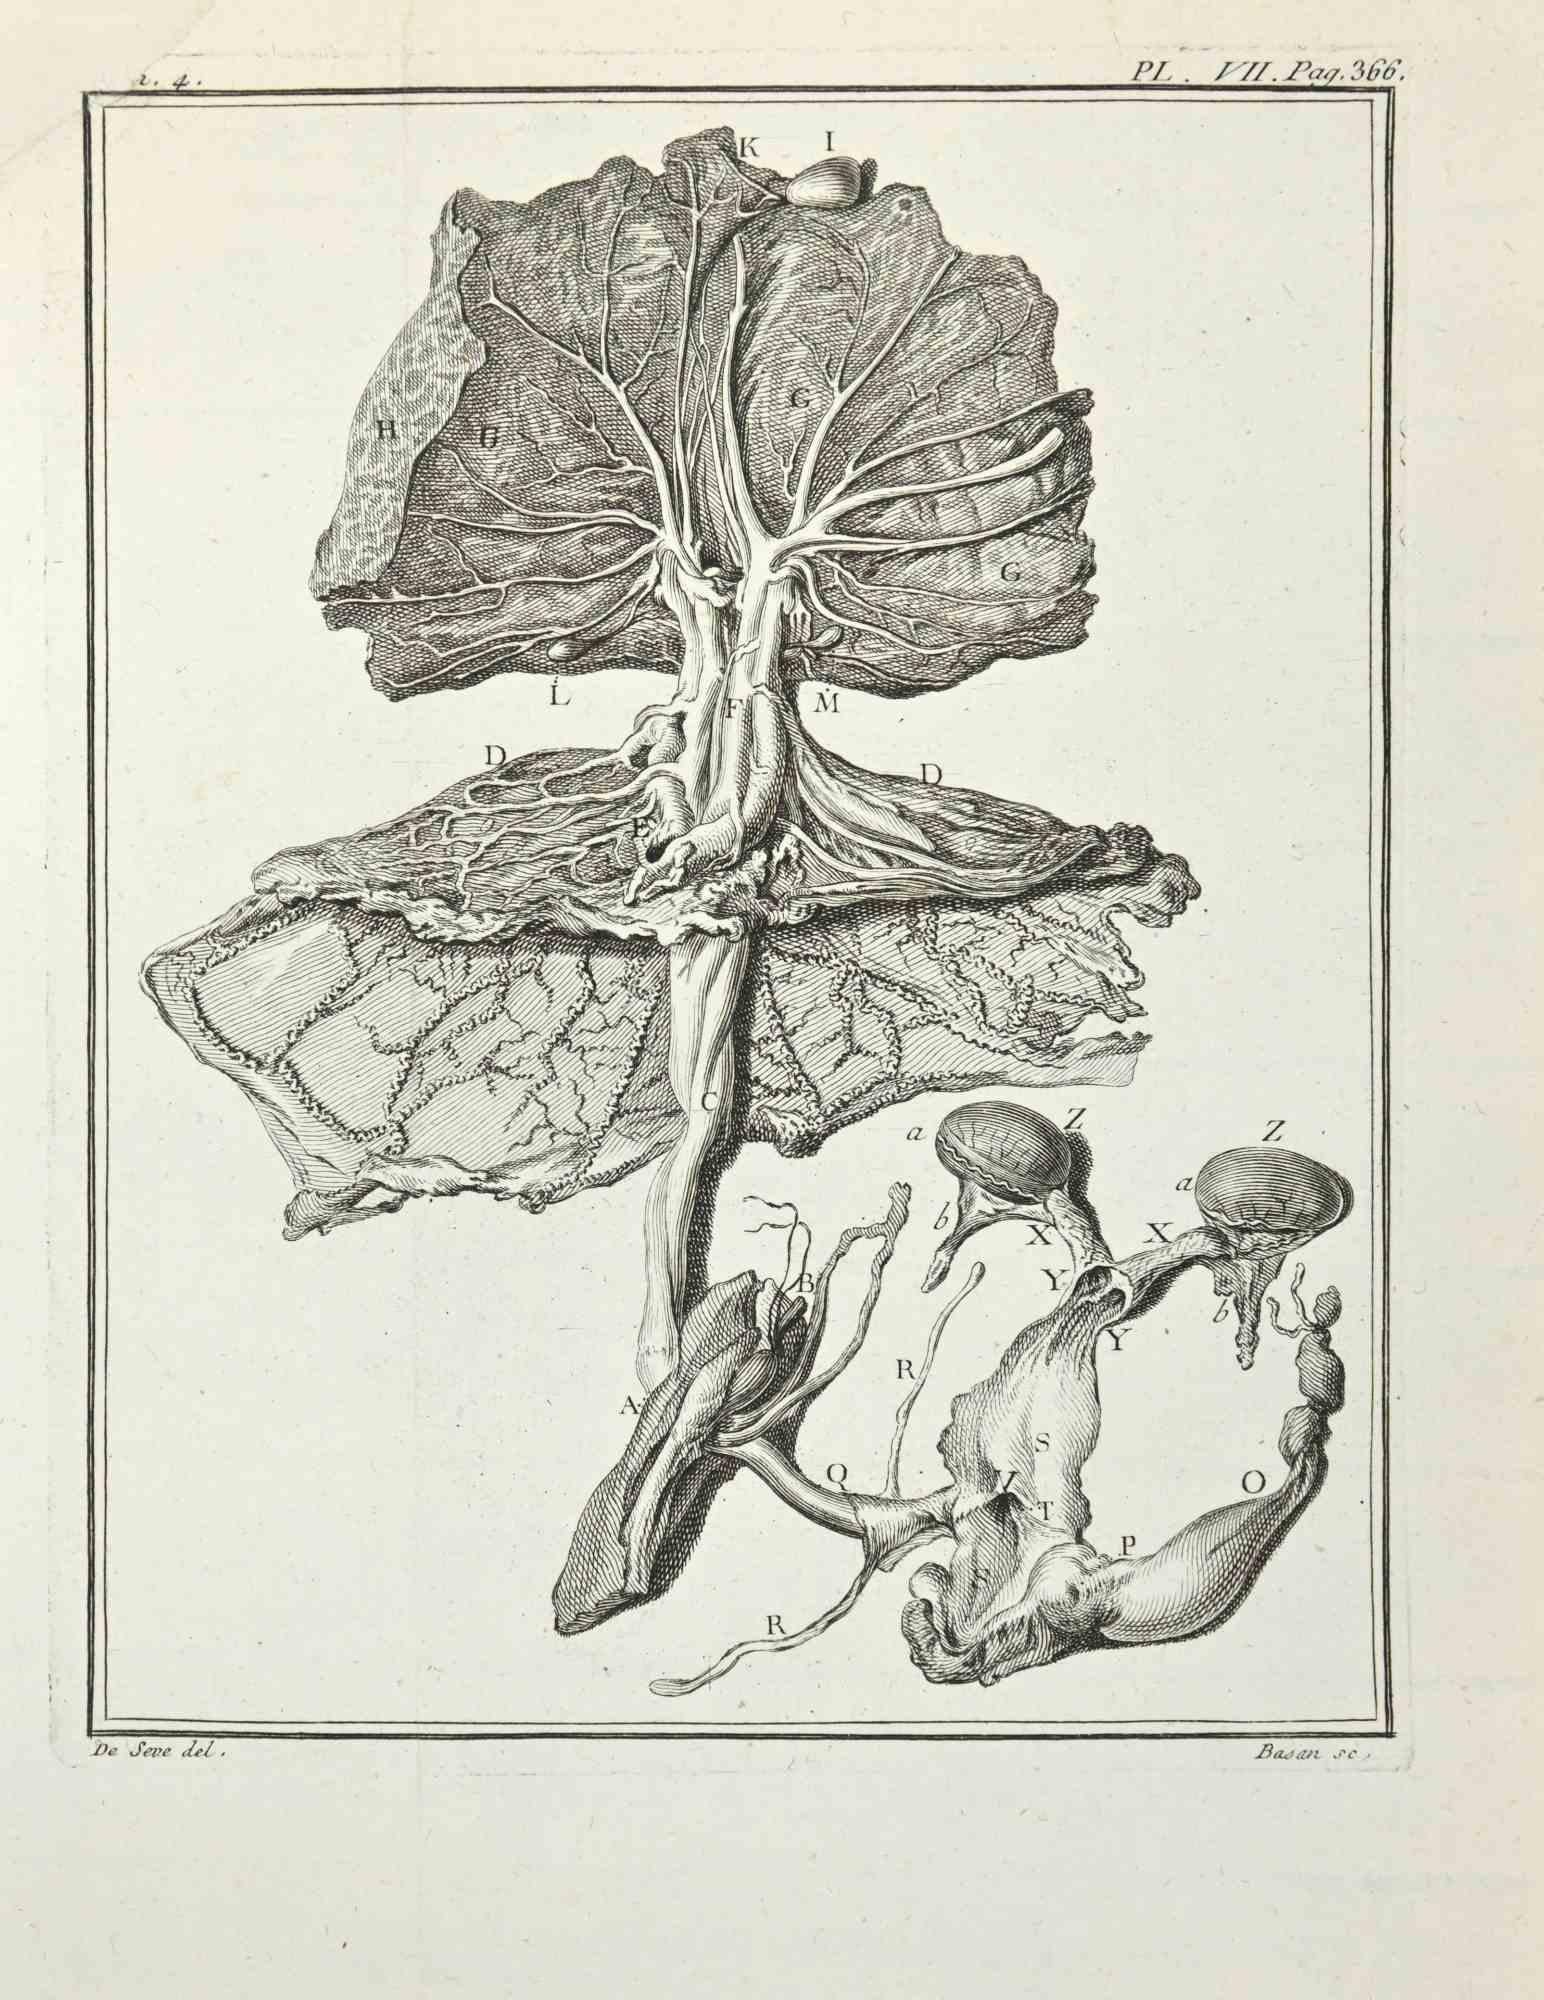 Pierre Francois Basan (1723-1797) after Founan Figurative Print - Anatomy of Animals - Etching by F. Basan - 1771